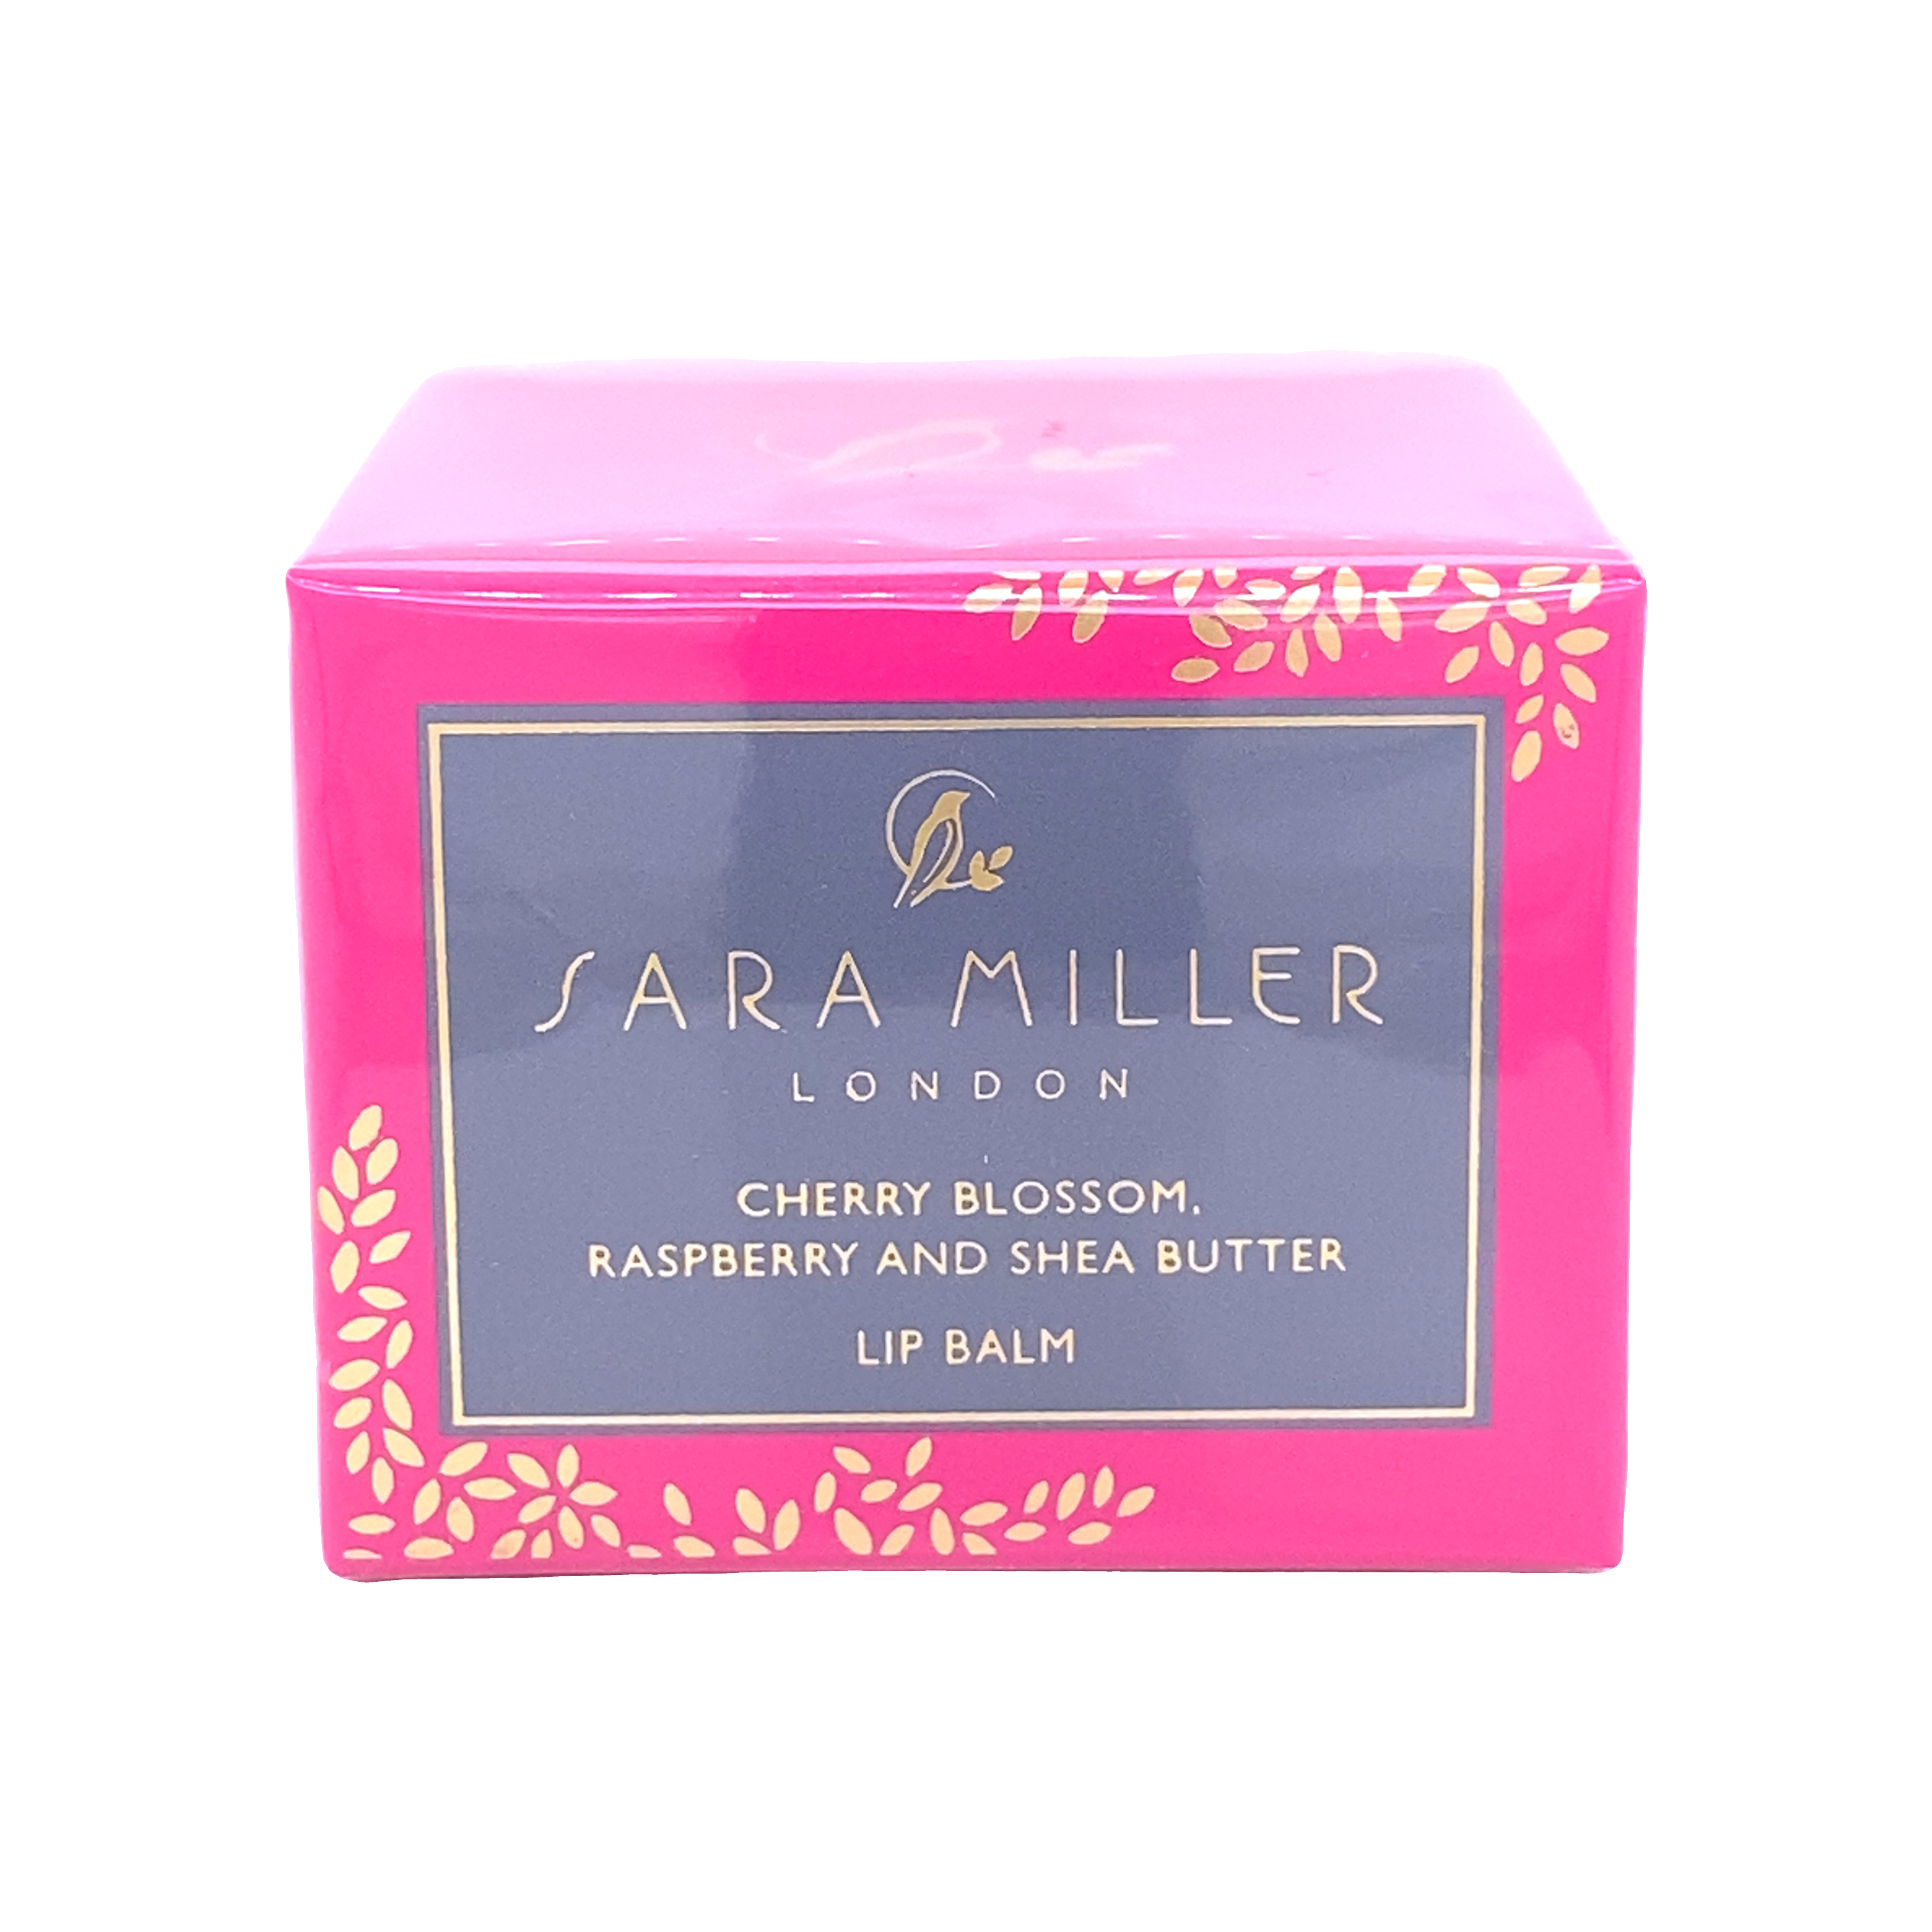 Sara Miller London Cherry Blossom, Raspberry and Shea Butter Lip Balm